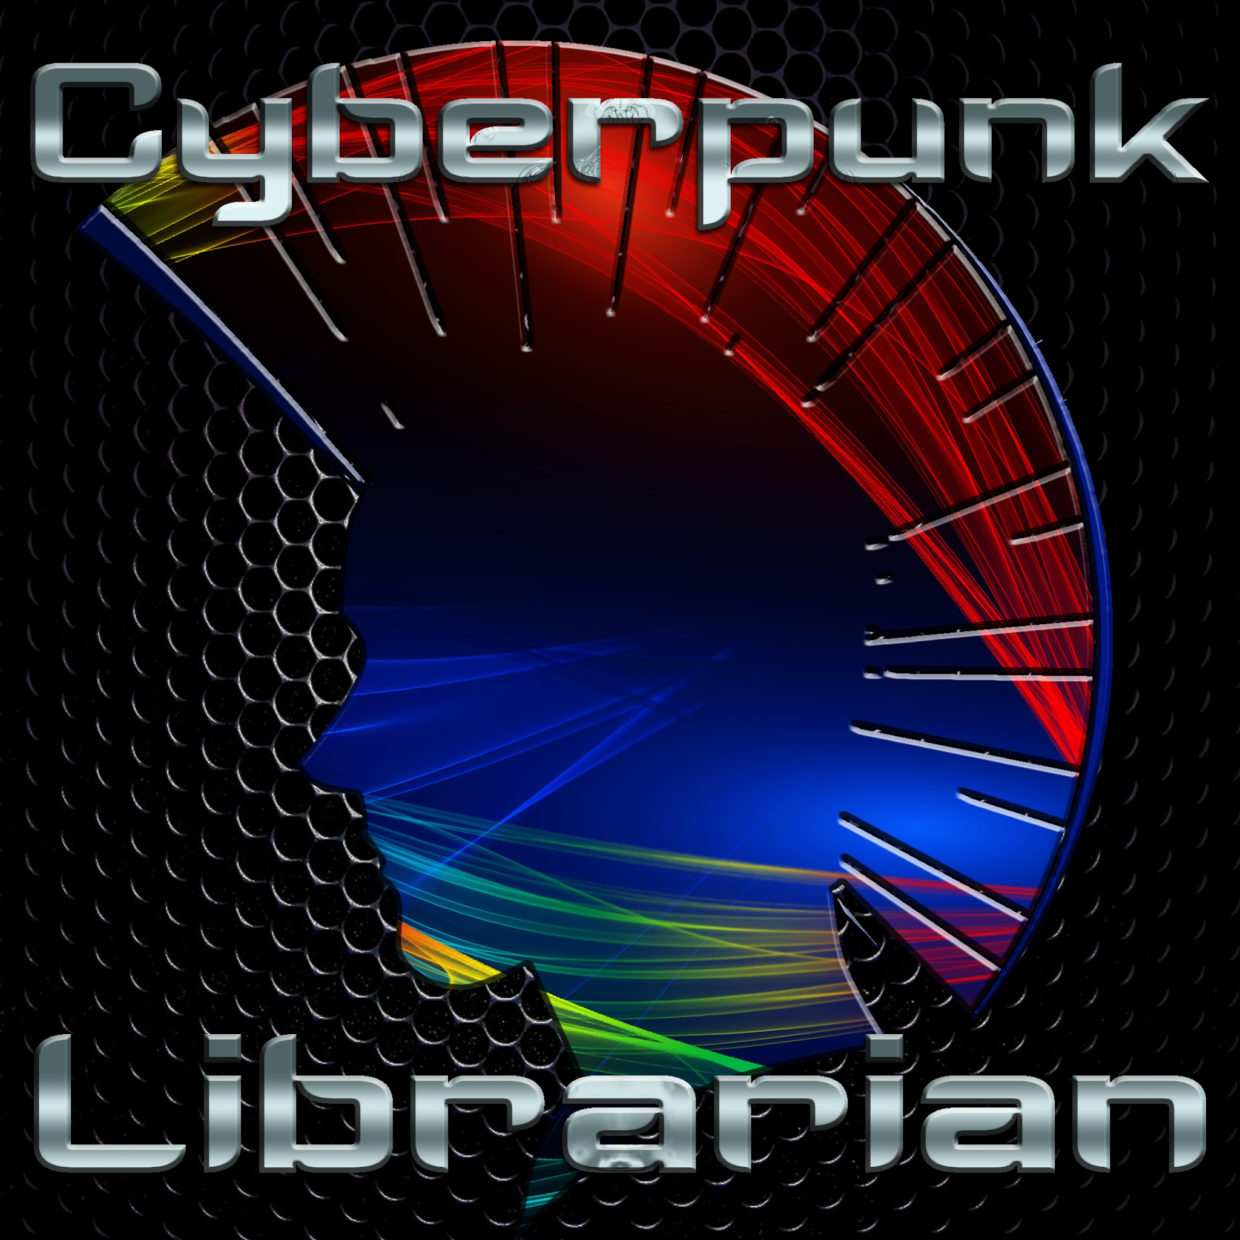 Cyberpunk Librarian podcast logo